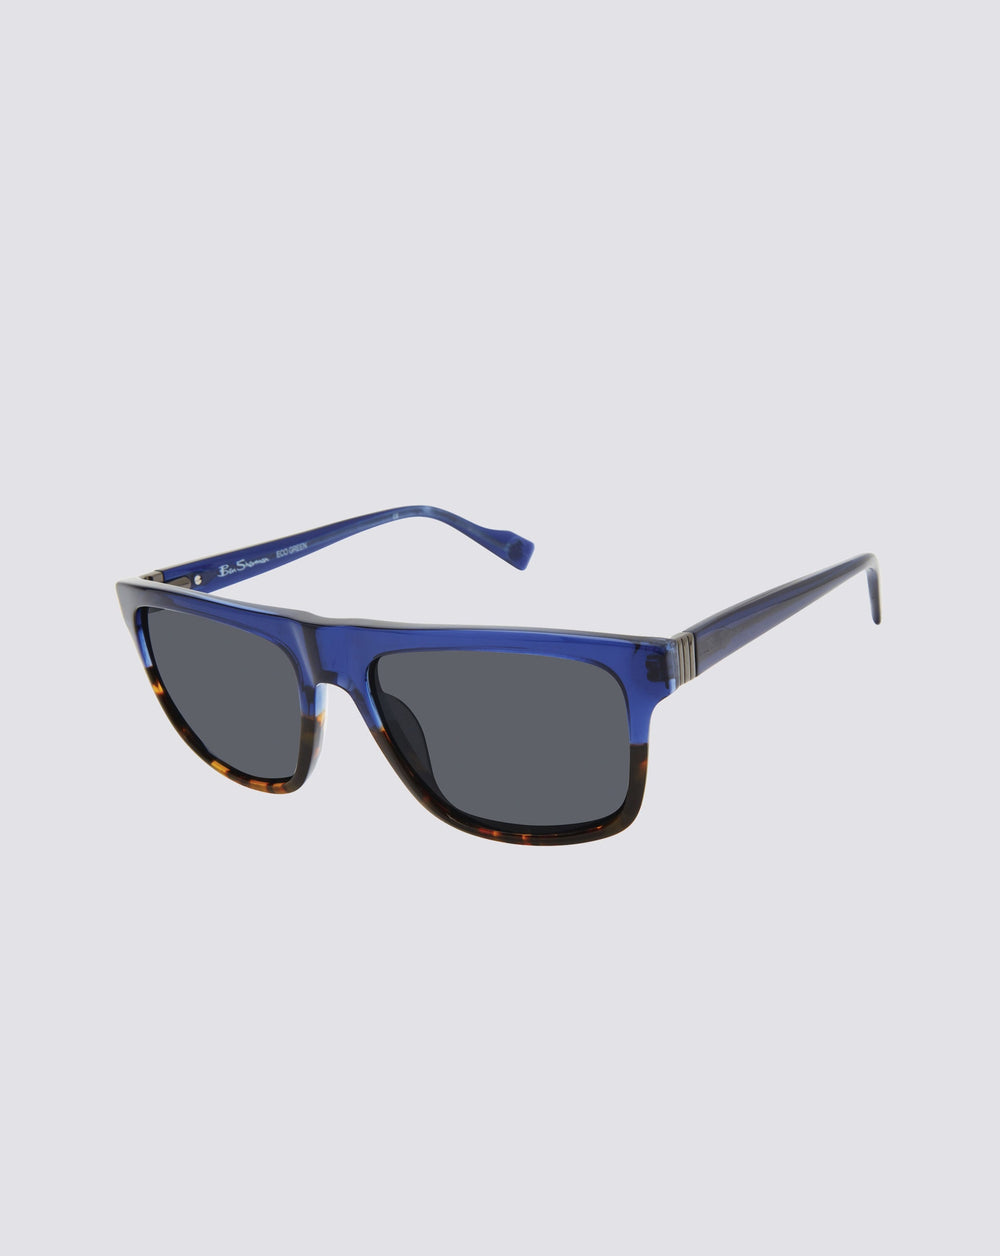 Kings Polarized Retro Square Eco Sunglasses - Blue Tortoise